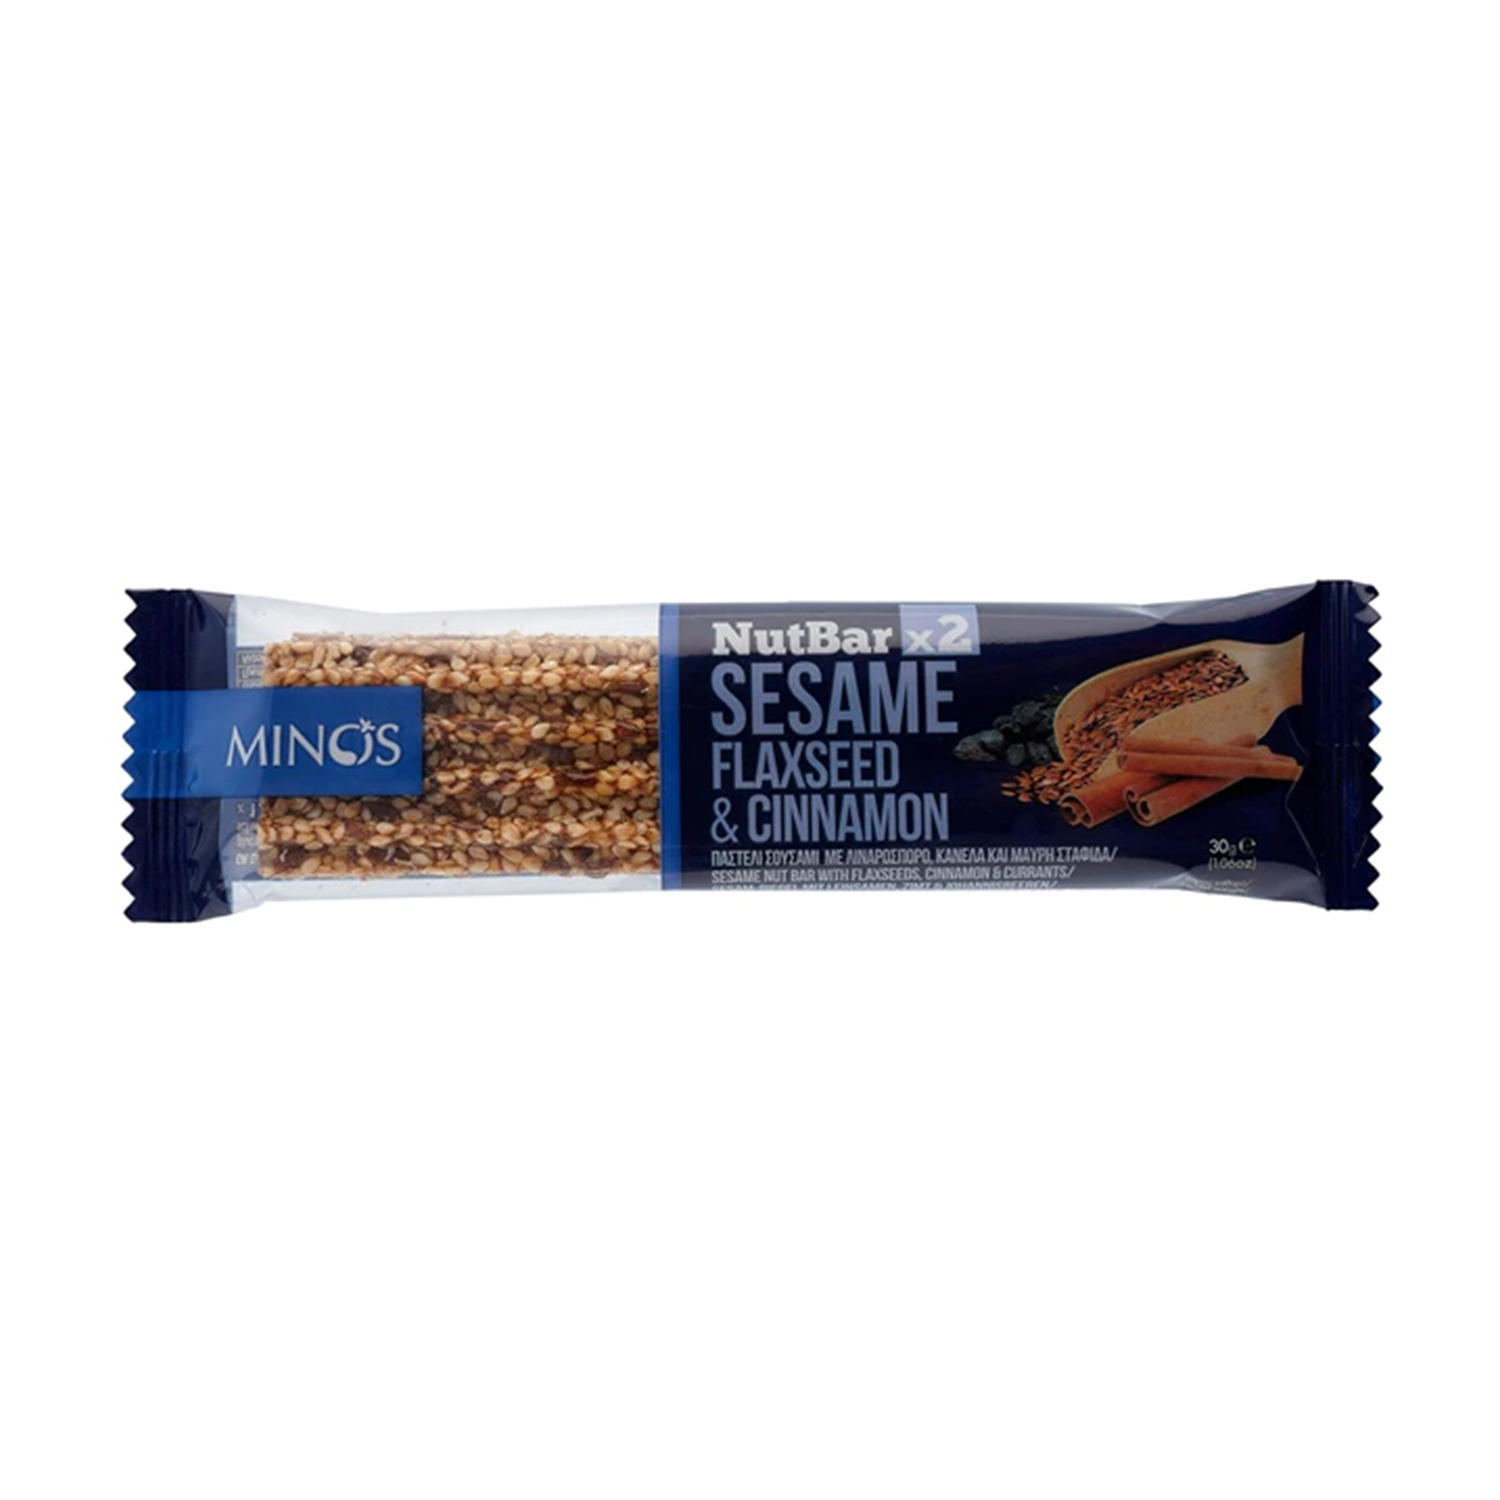 Minos Nut Bar Sesame 30g